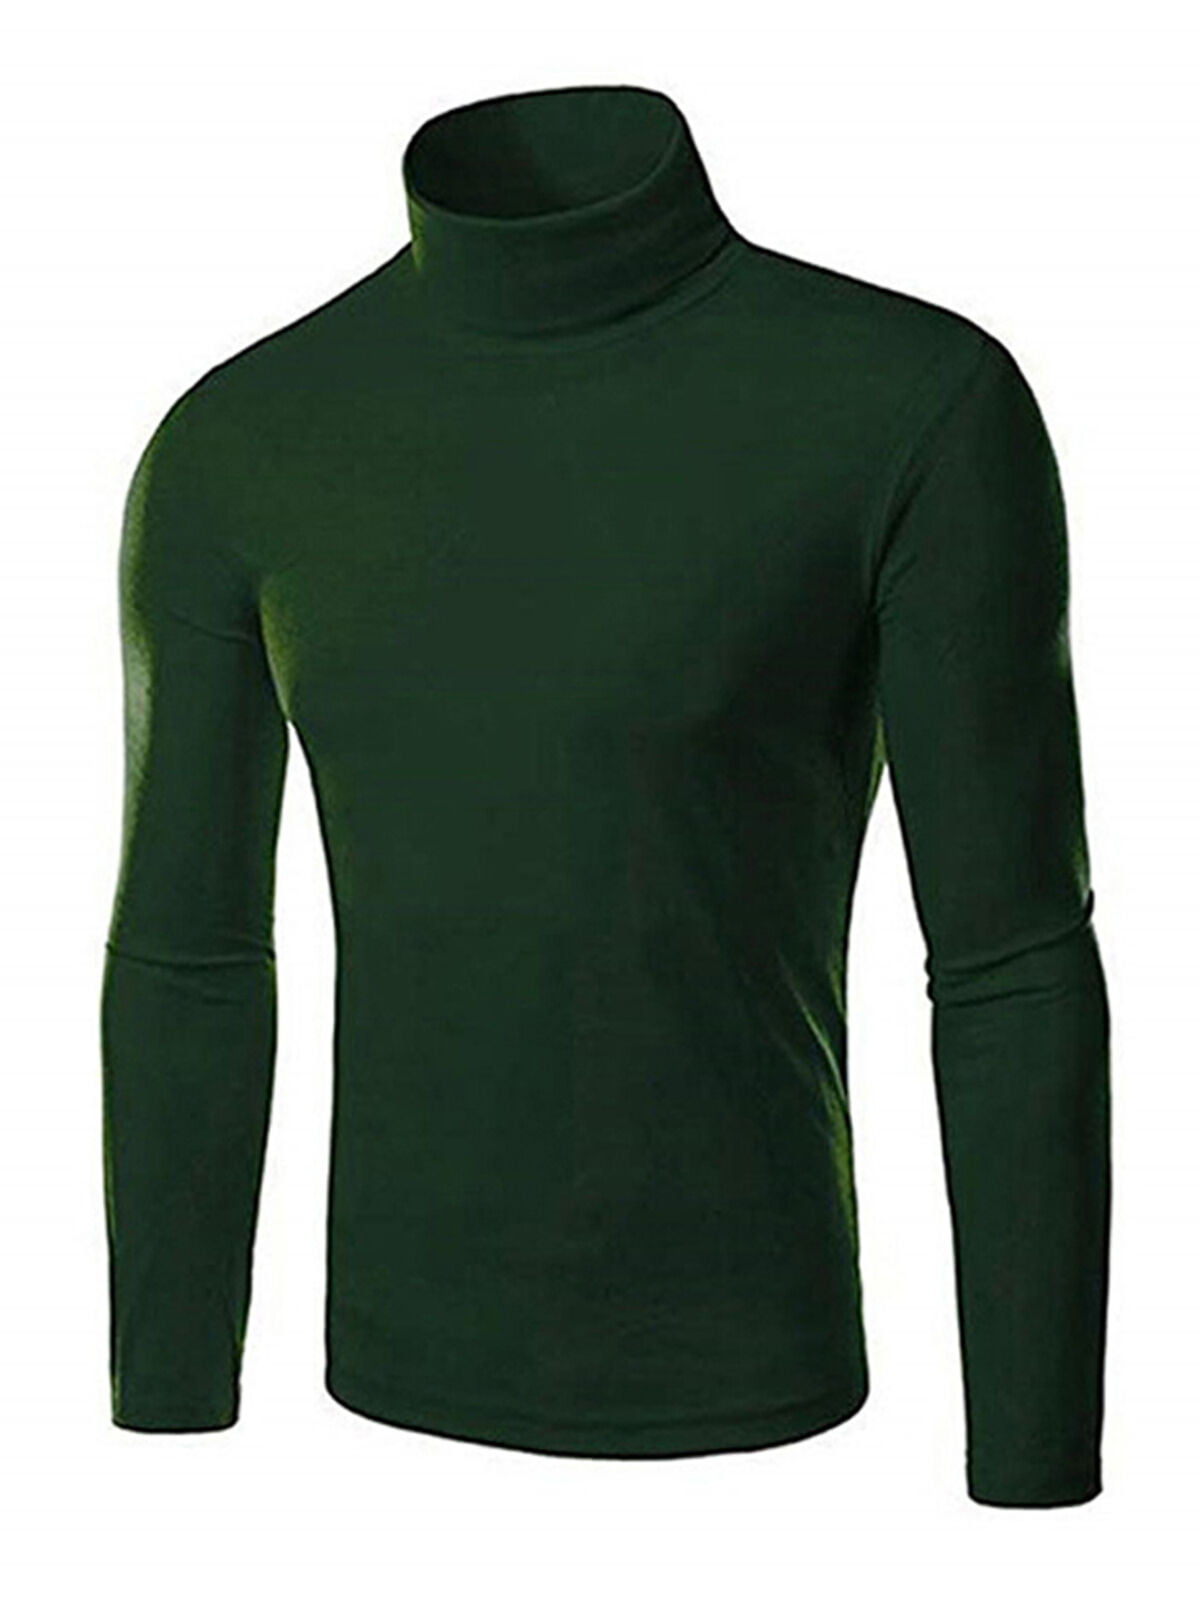 Mens LS Thermal Undershirt Under Ski Shirt Warm Winter Outdoor Large XL 2XL NEW 